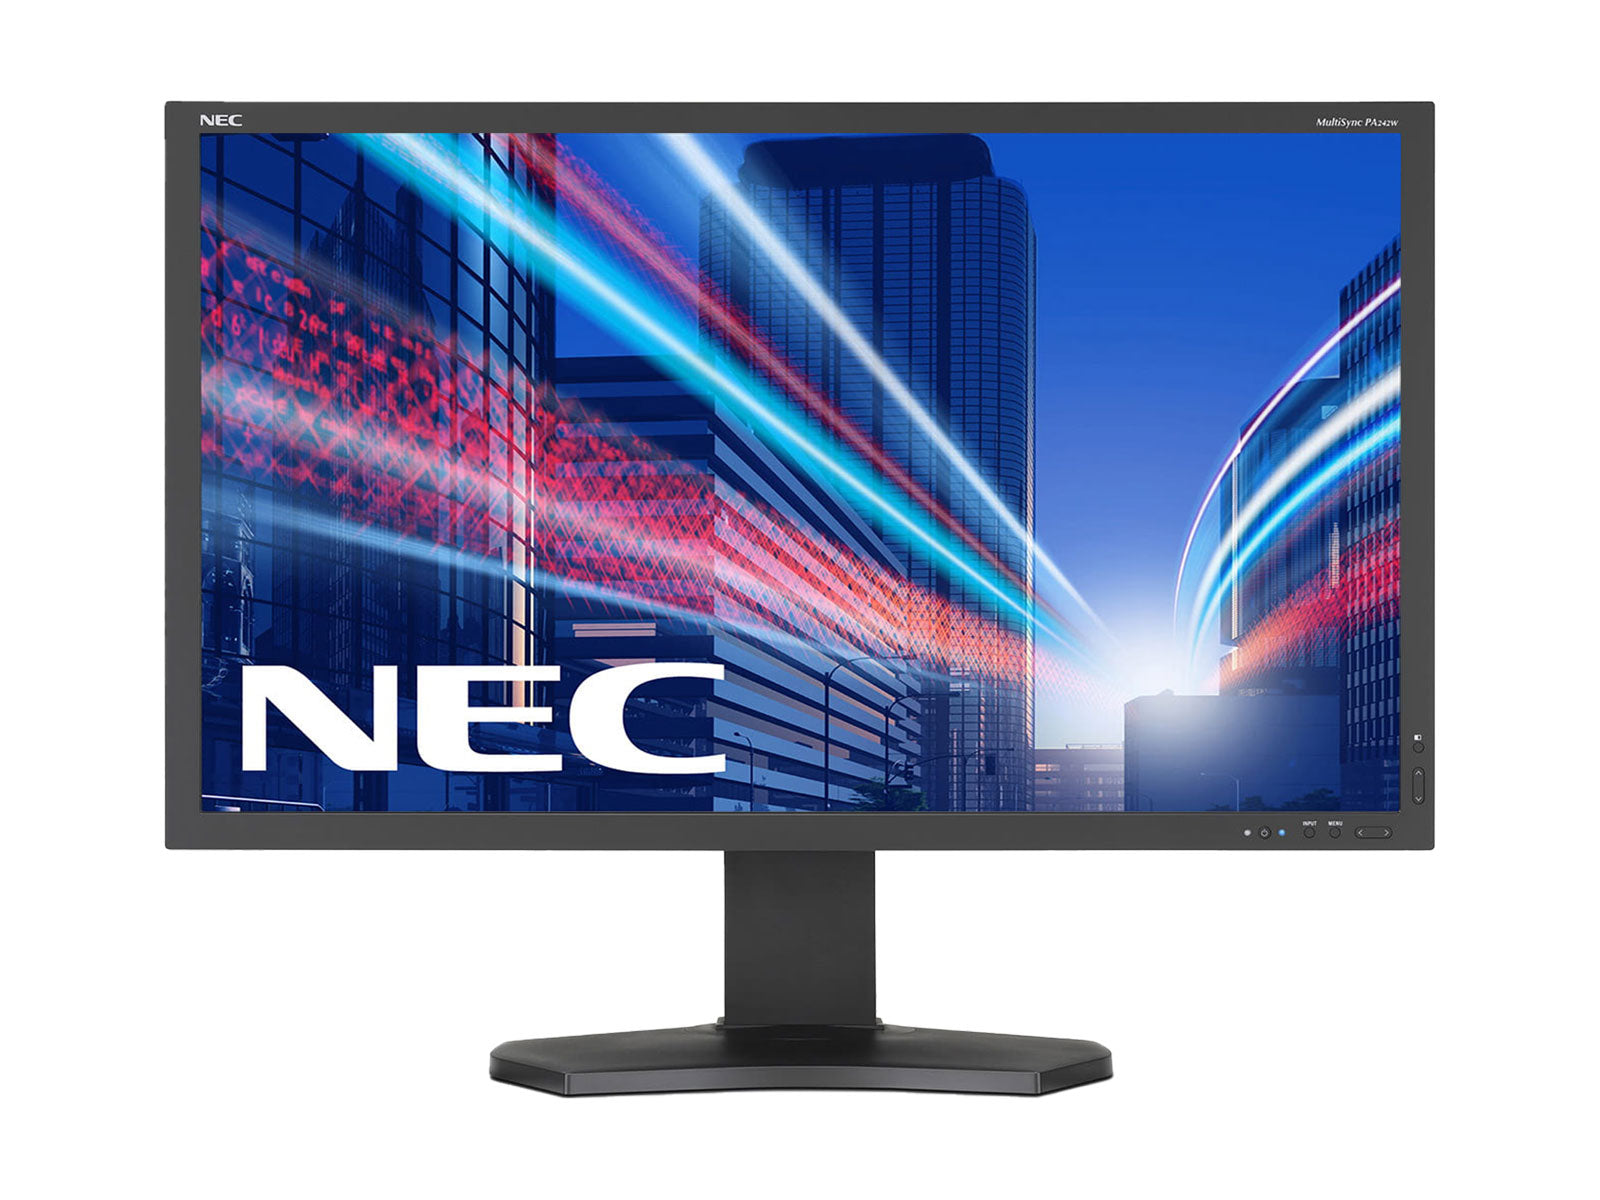 NEC MultiSync PA242W 24" WUXGA 1920 x 1200 Professional Wide Gamut Graphics Display Monitor (PA242W)